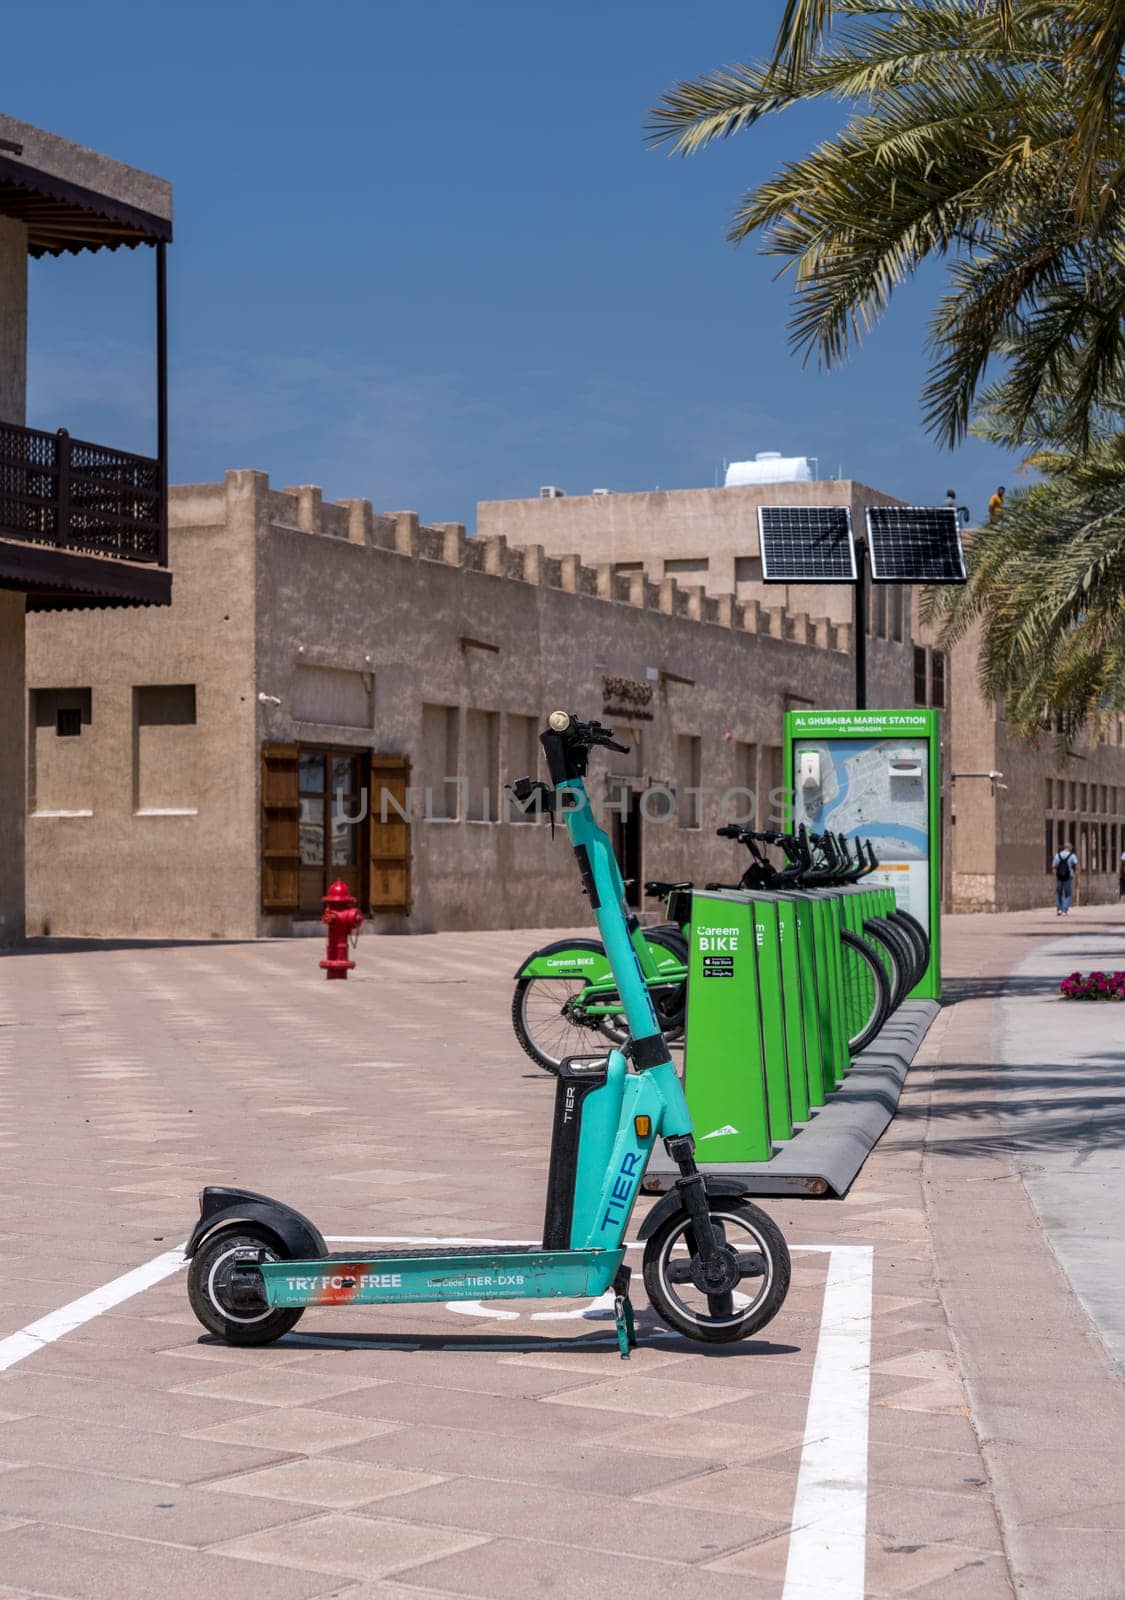 Careem bike rental stand in Al Shindagha district in Dubai by steheap